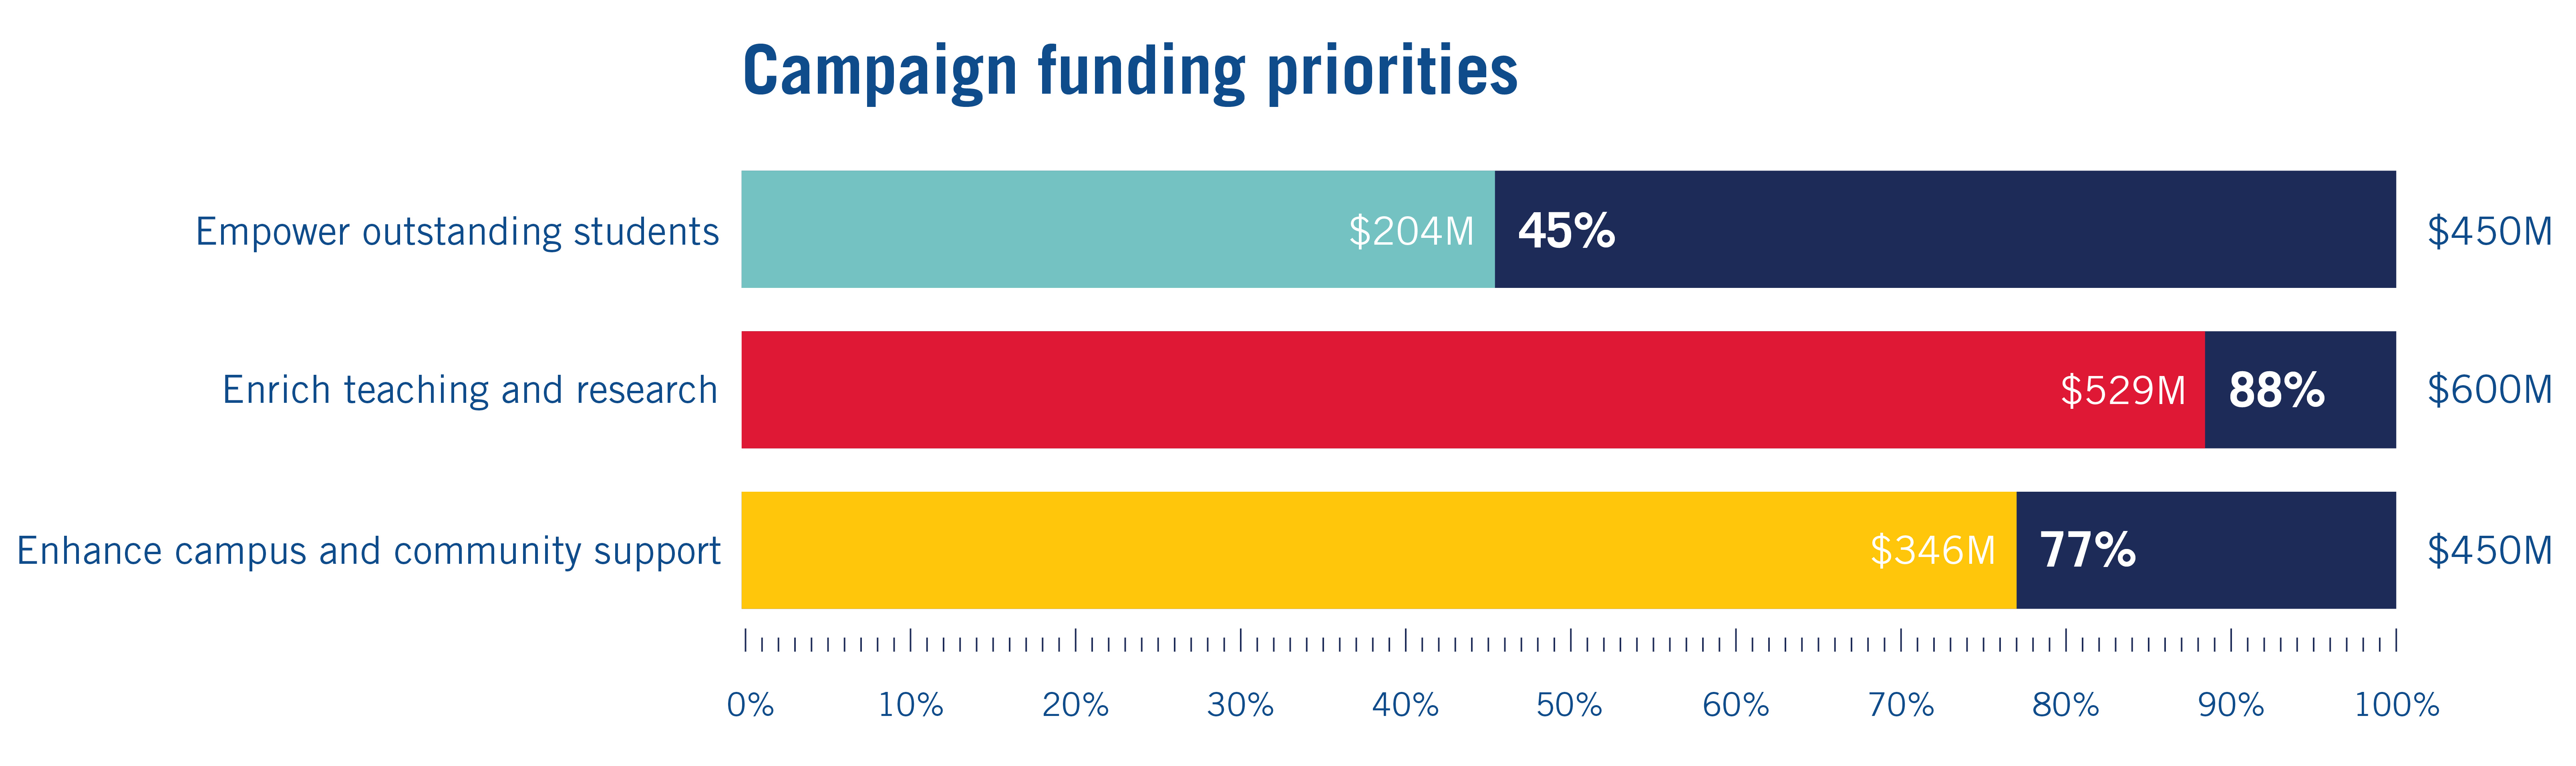 Campaign funding priorities